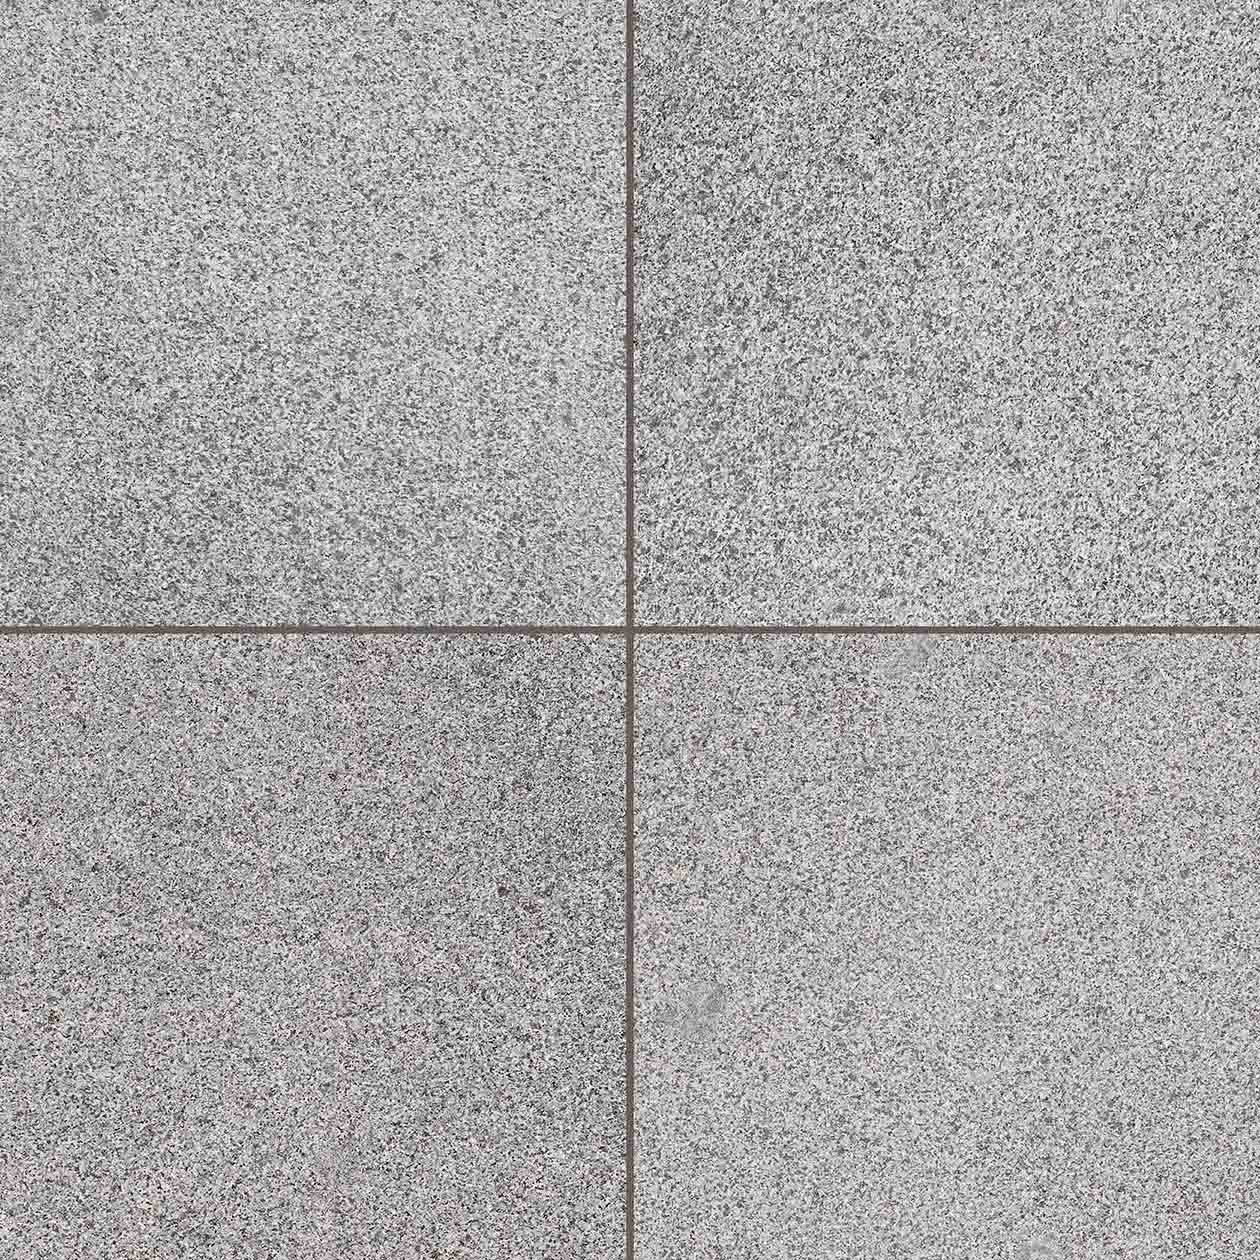 Dark Grey Granite 400x400x20mm Tile